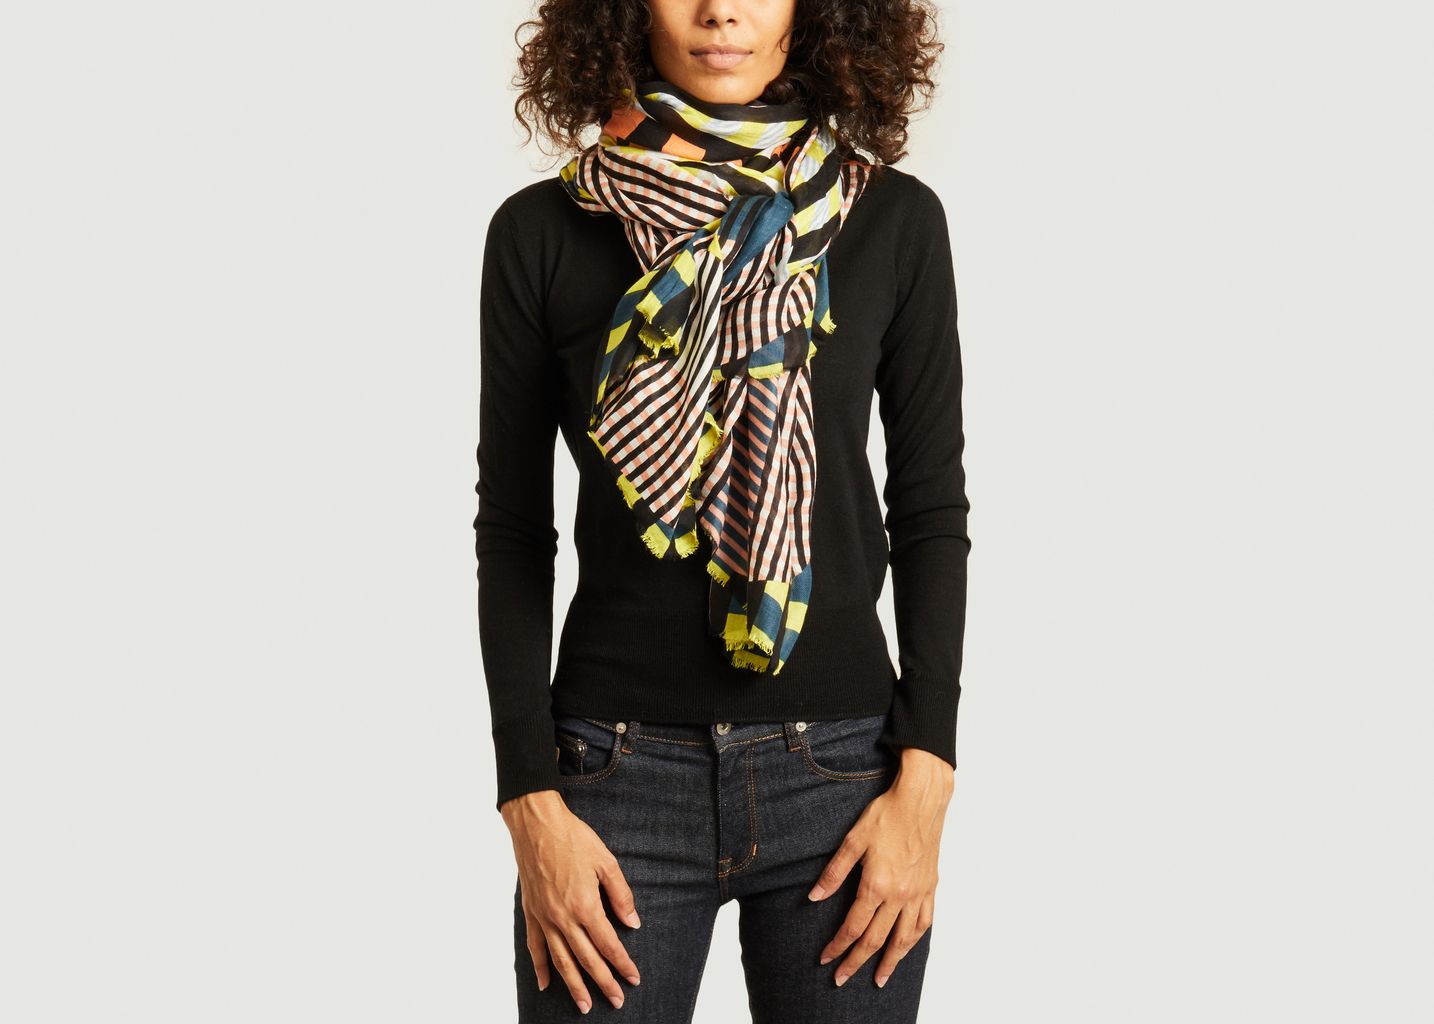 Domino scarf - Mapoésie